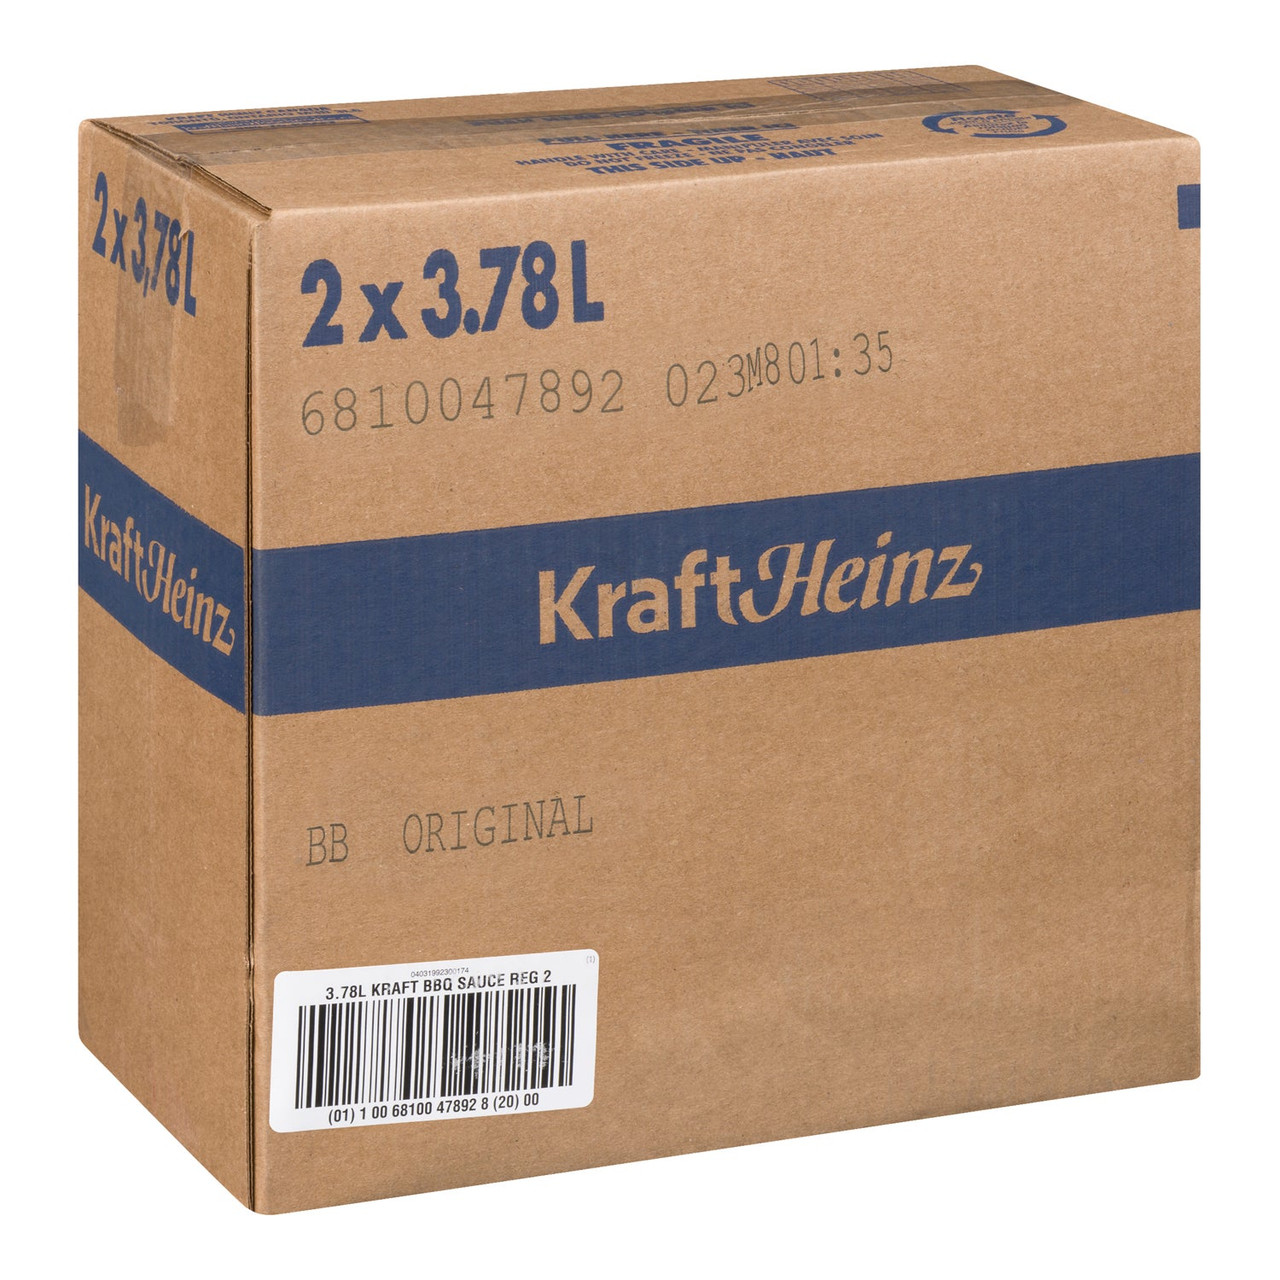 Kraft Original Barbeque Sauce, Trans Fat Compliant | 3.78L/Unit, 2 Units/Case